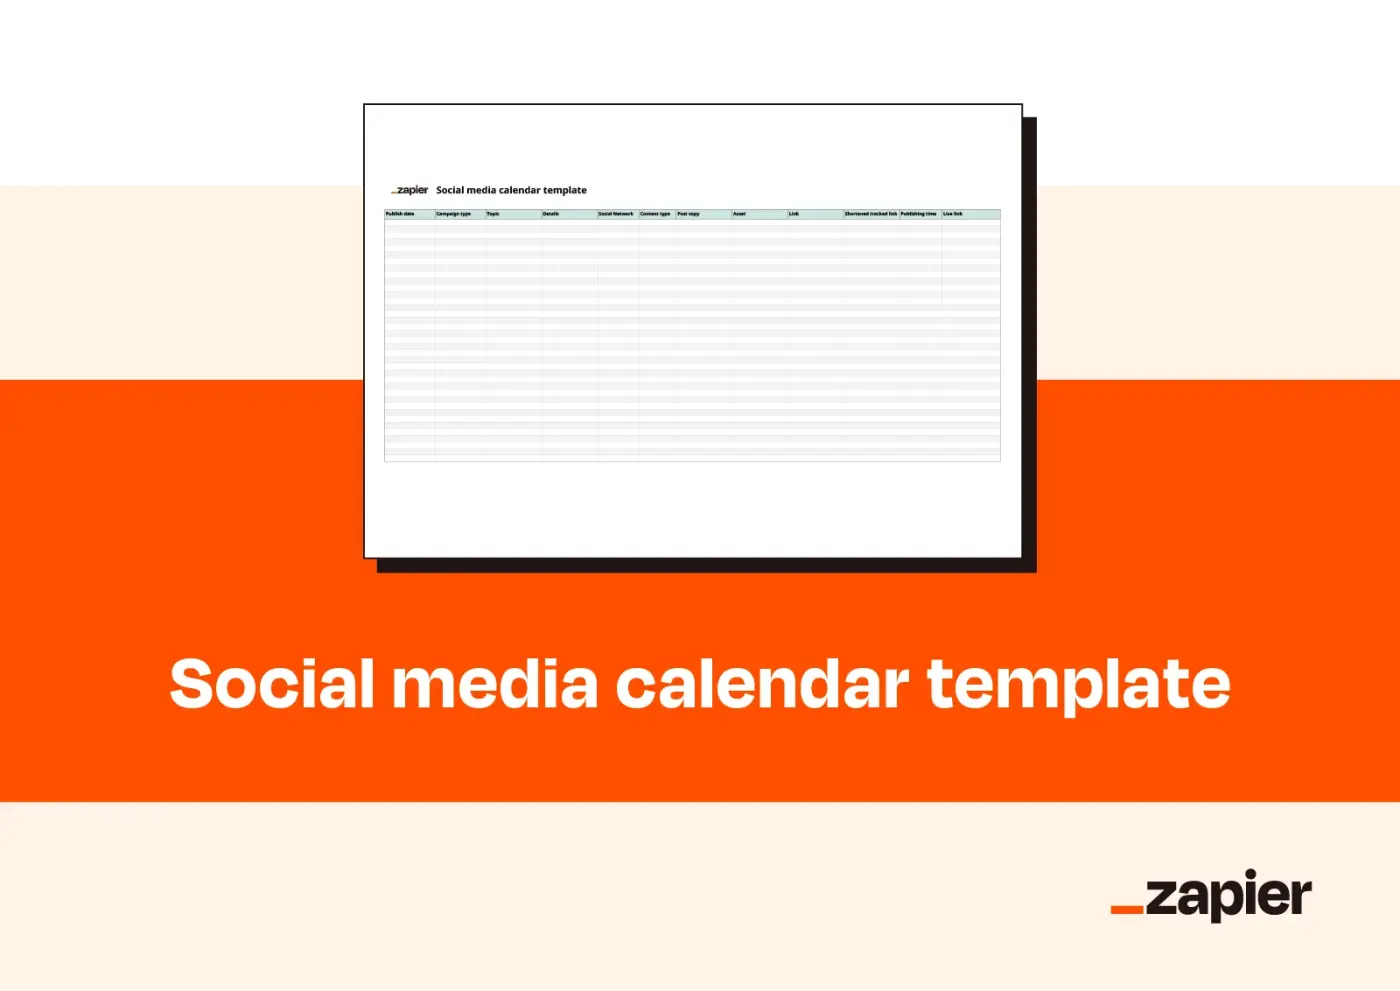 Mockup showcasing Zapier's social media calendar template